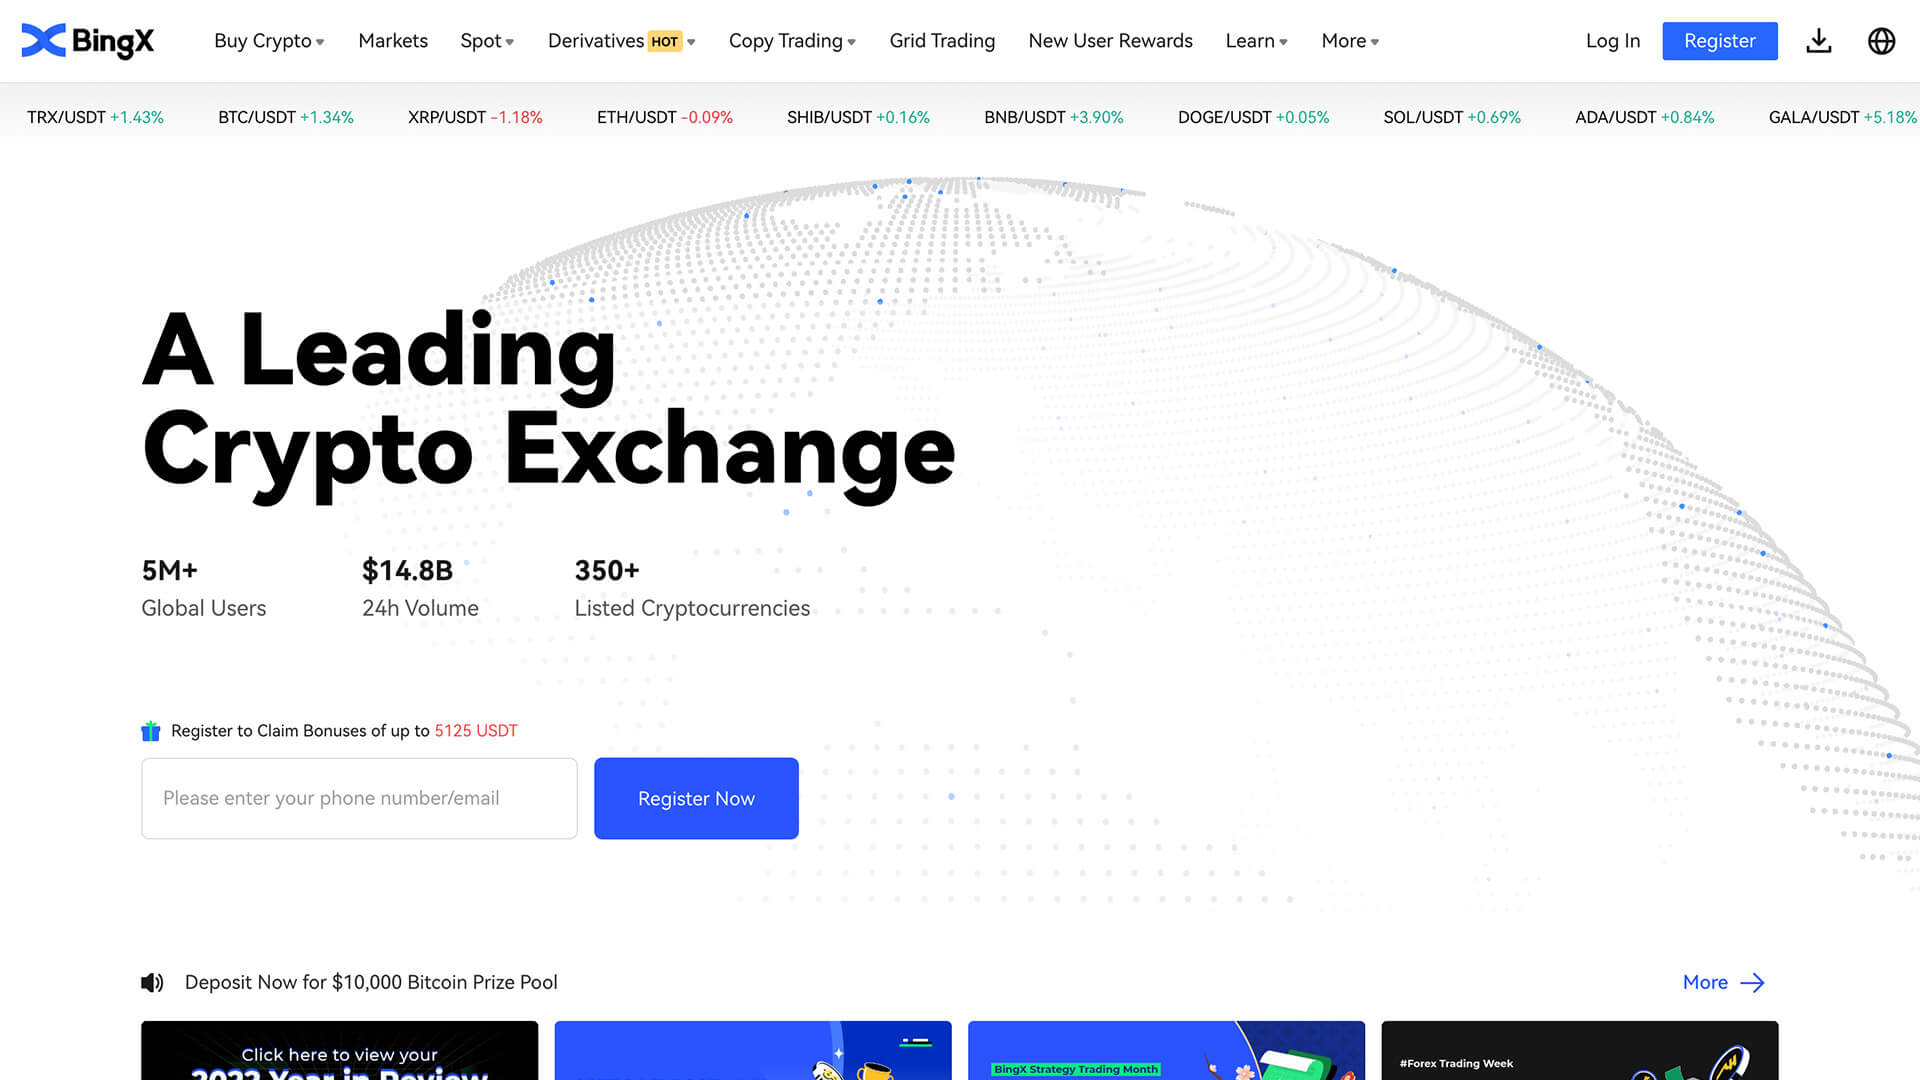 BingX Crypto Exchange